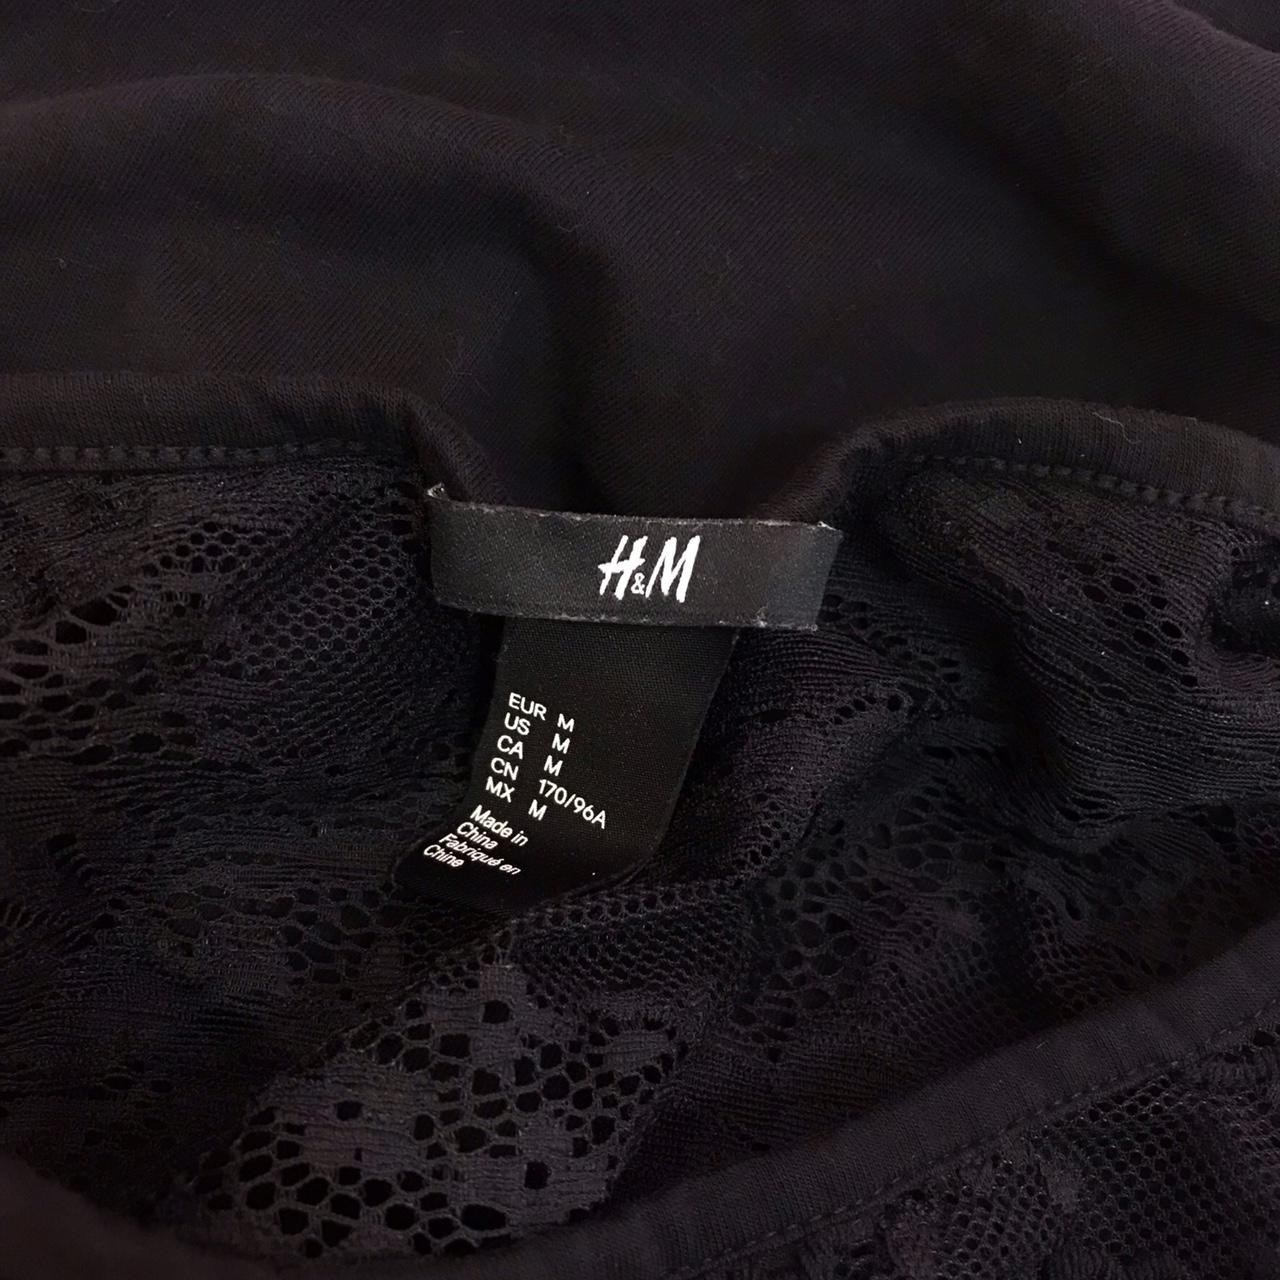 Product Image 4 - H&M black lace panel shirt